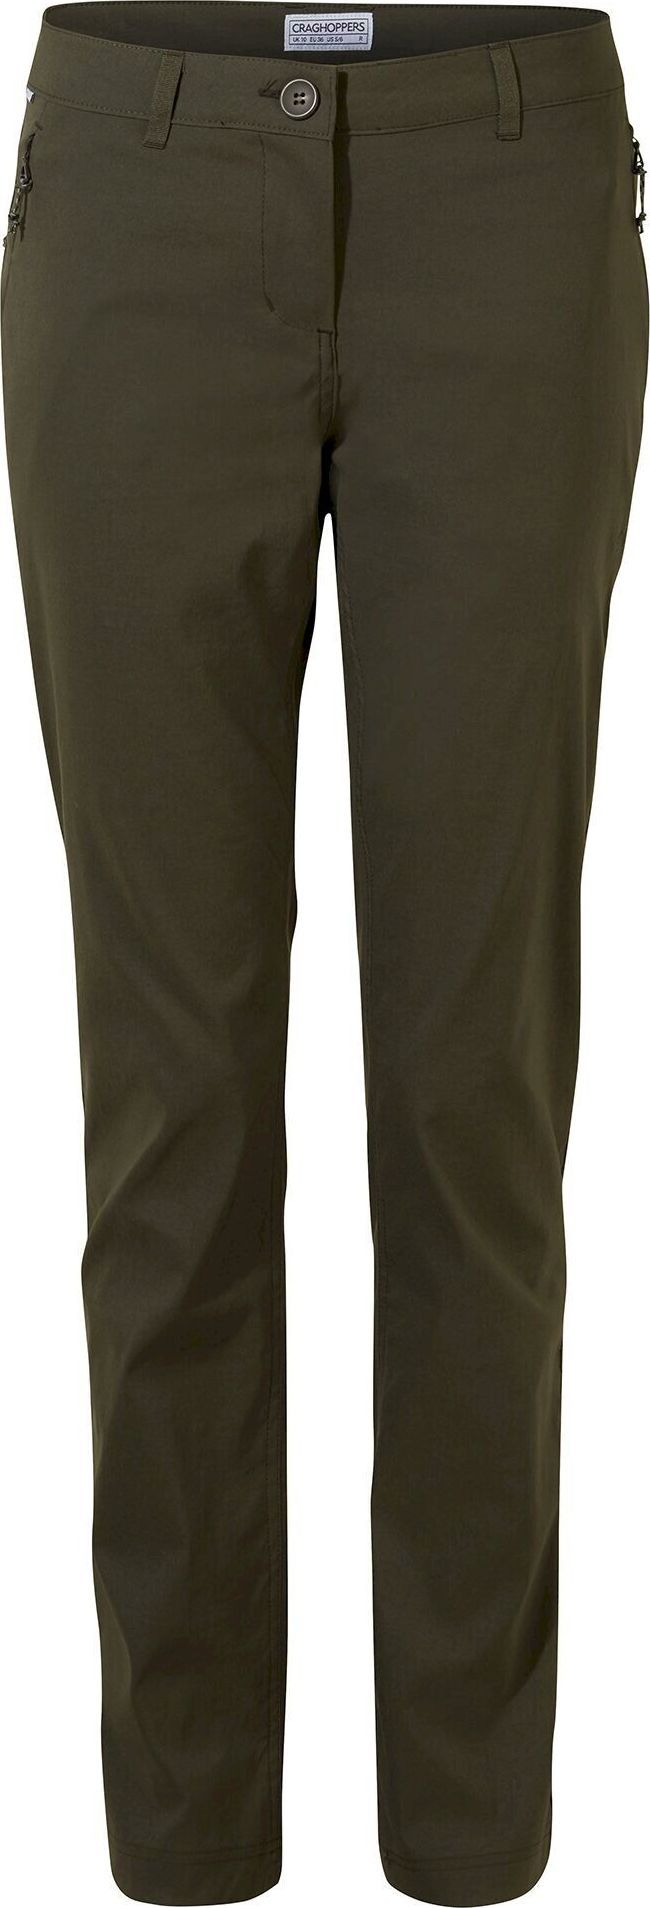 Women's Kiwi Pro II Trousers Mid Khaki